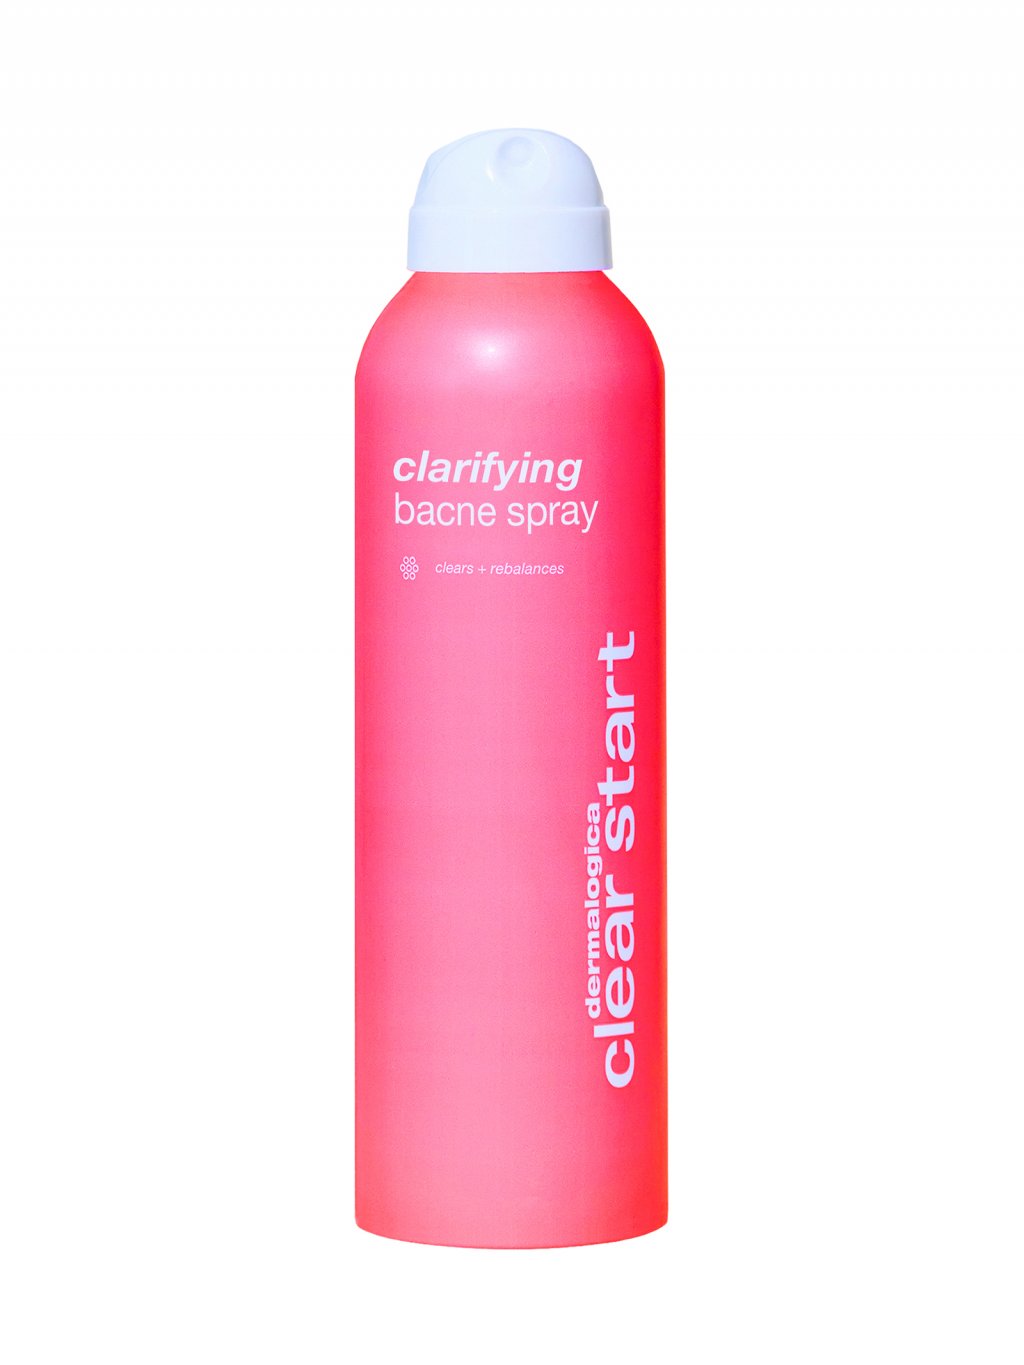 clarifying bacne spray, 177 ml